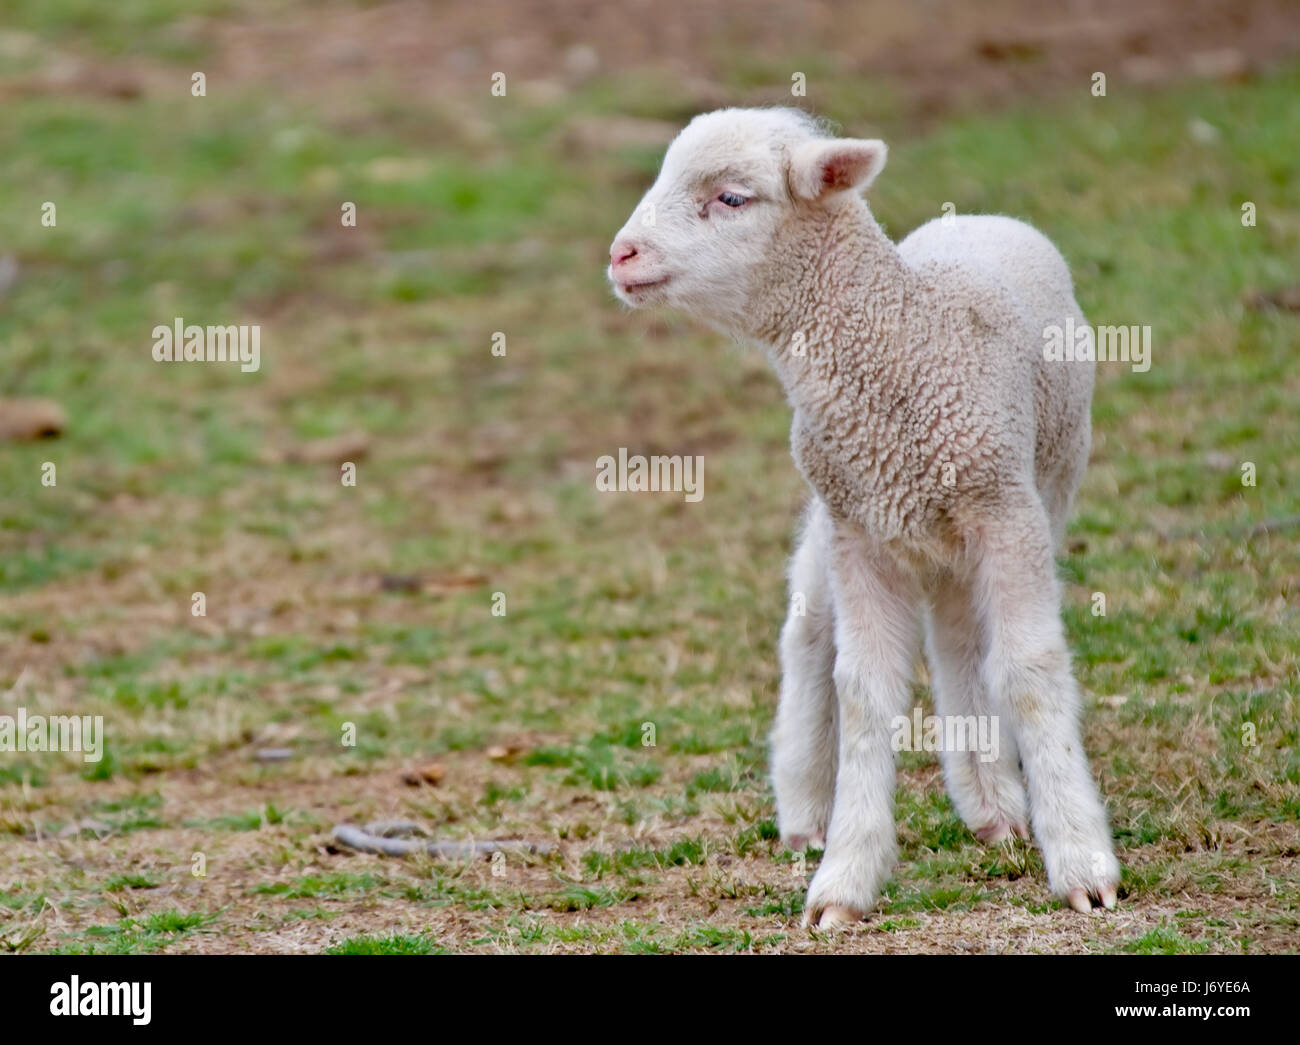 animal sheep farm woolly young younger lamb beautiful beauteously nice animal Stock Photo